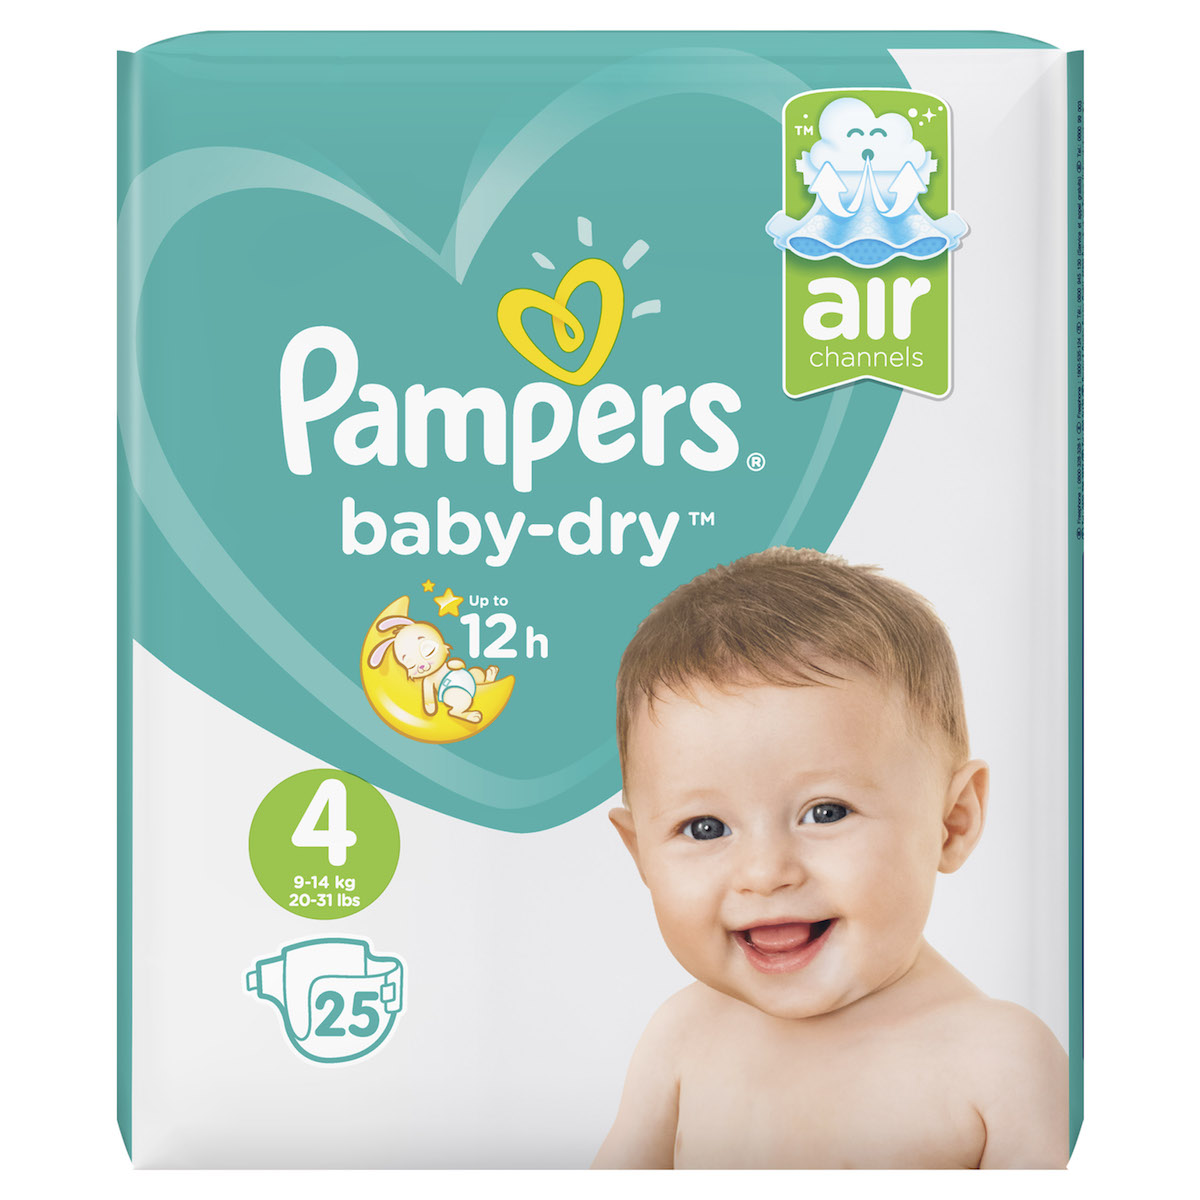 Pampers_Baby-Dry_Packshot